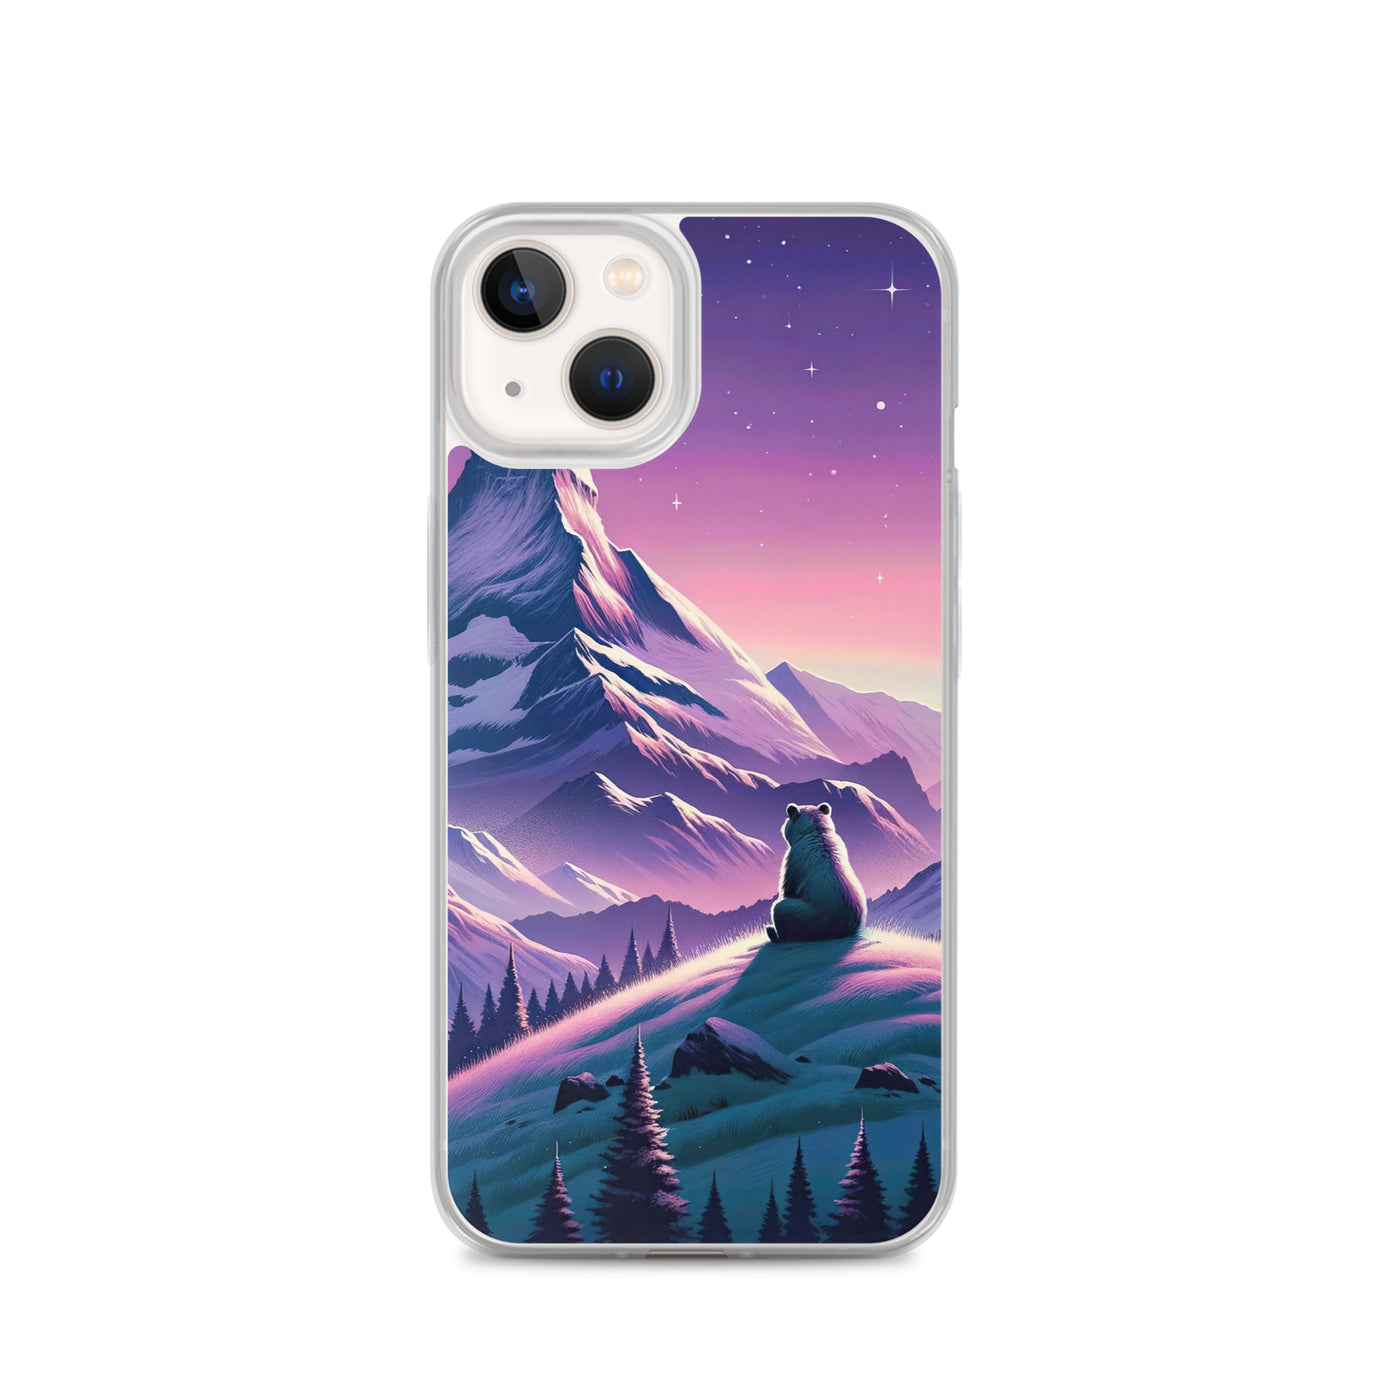 Bezaubernder Alpenabend mit Bär, lavendel-rosafarbener Himmel (AN) - iPhone Schutzhülle (durchsichtig) xxx yyy zzz iPhone 13